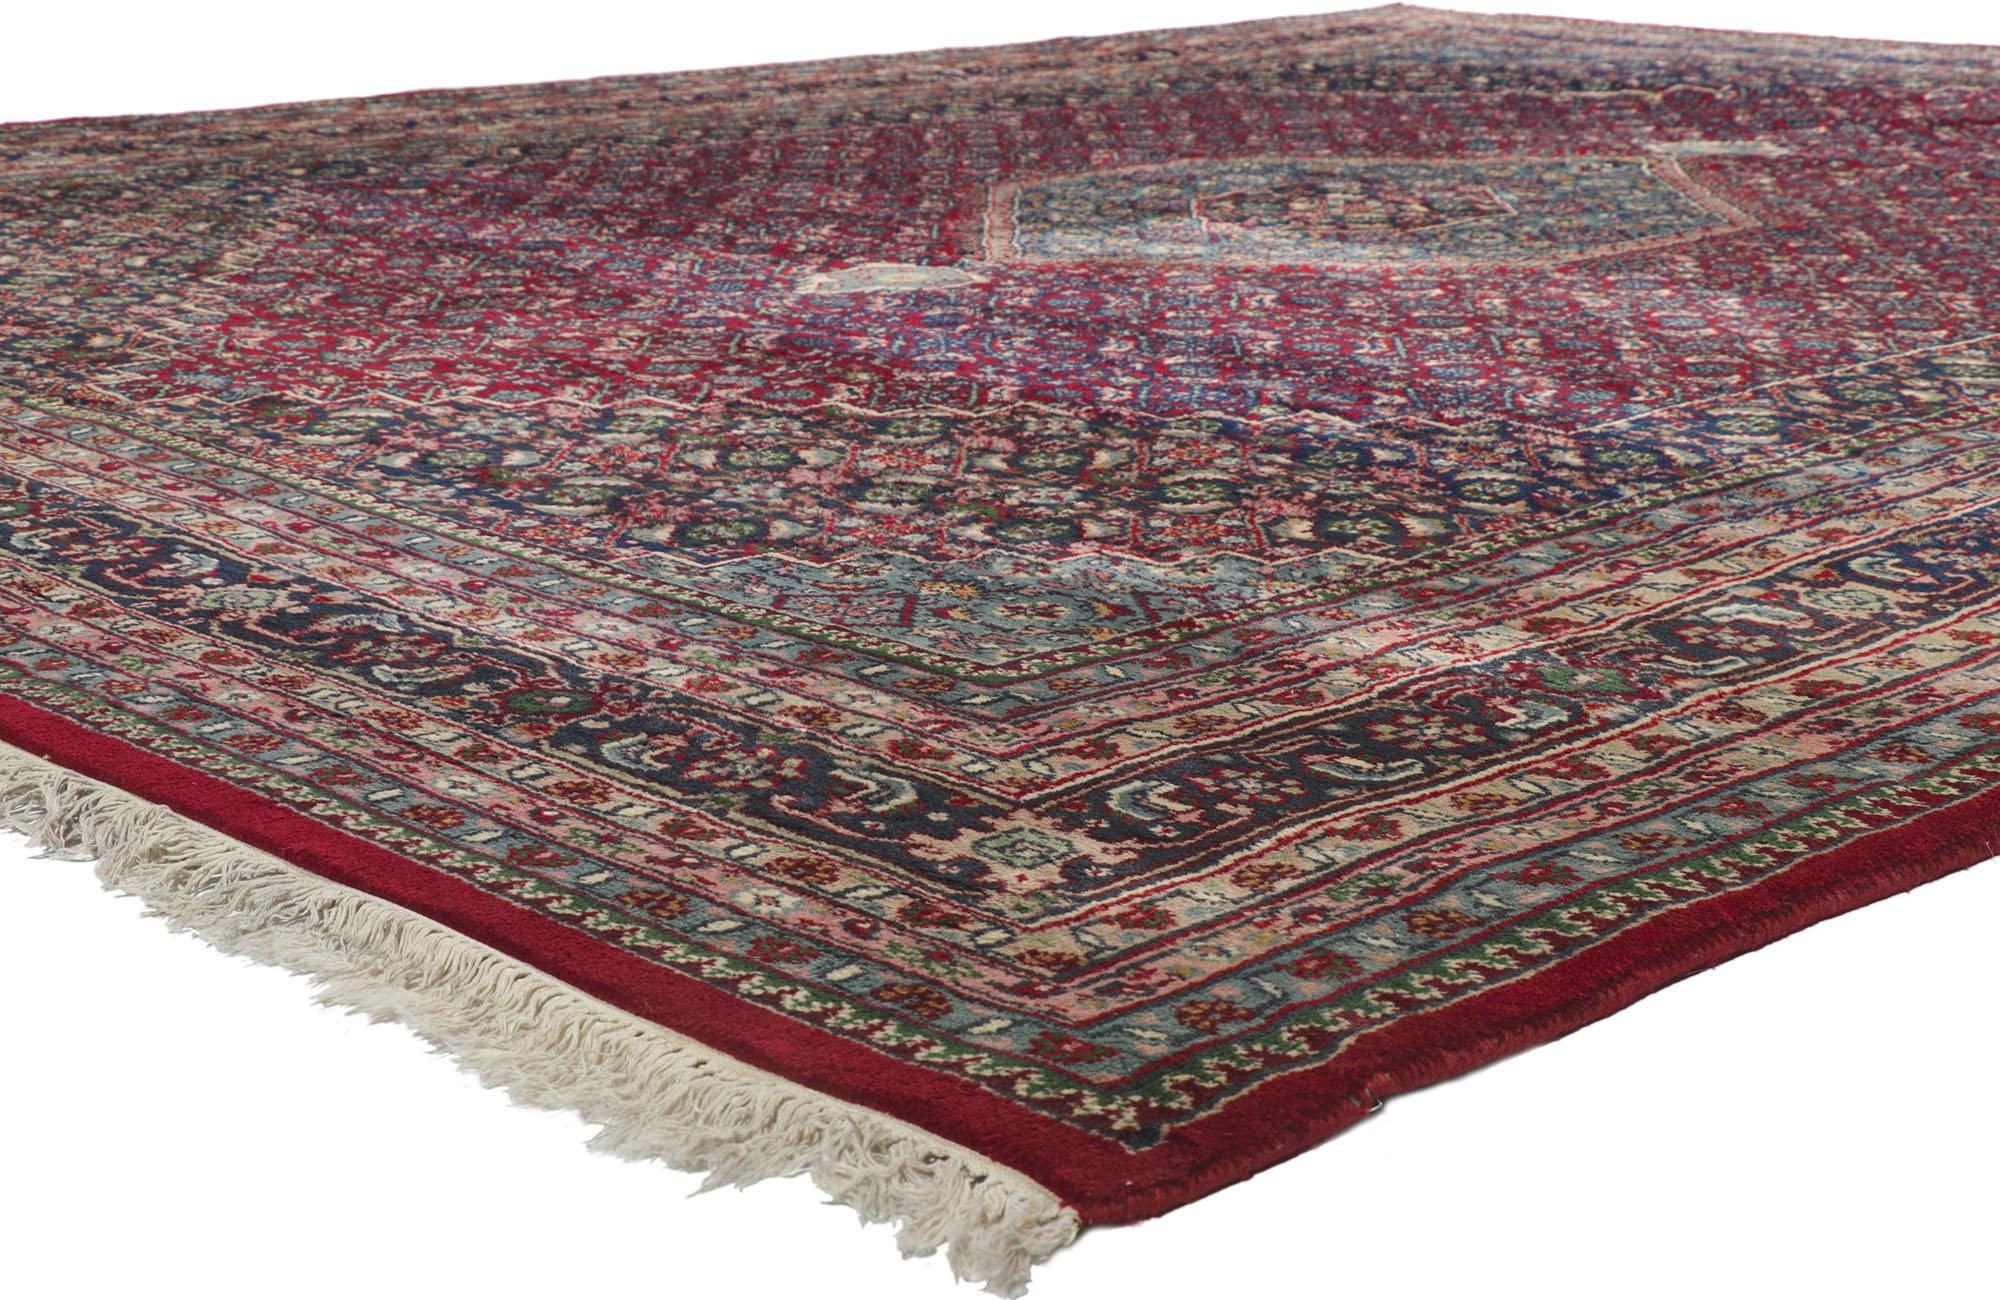 77621 Vintage Persian Bijar Style Indian rug, 11'10 x 15'02.